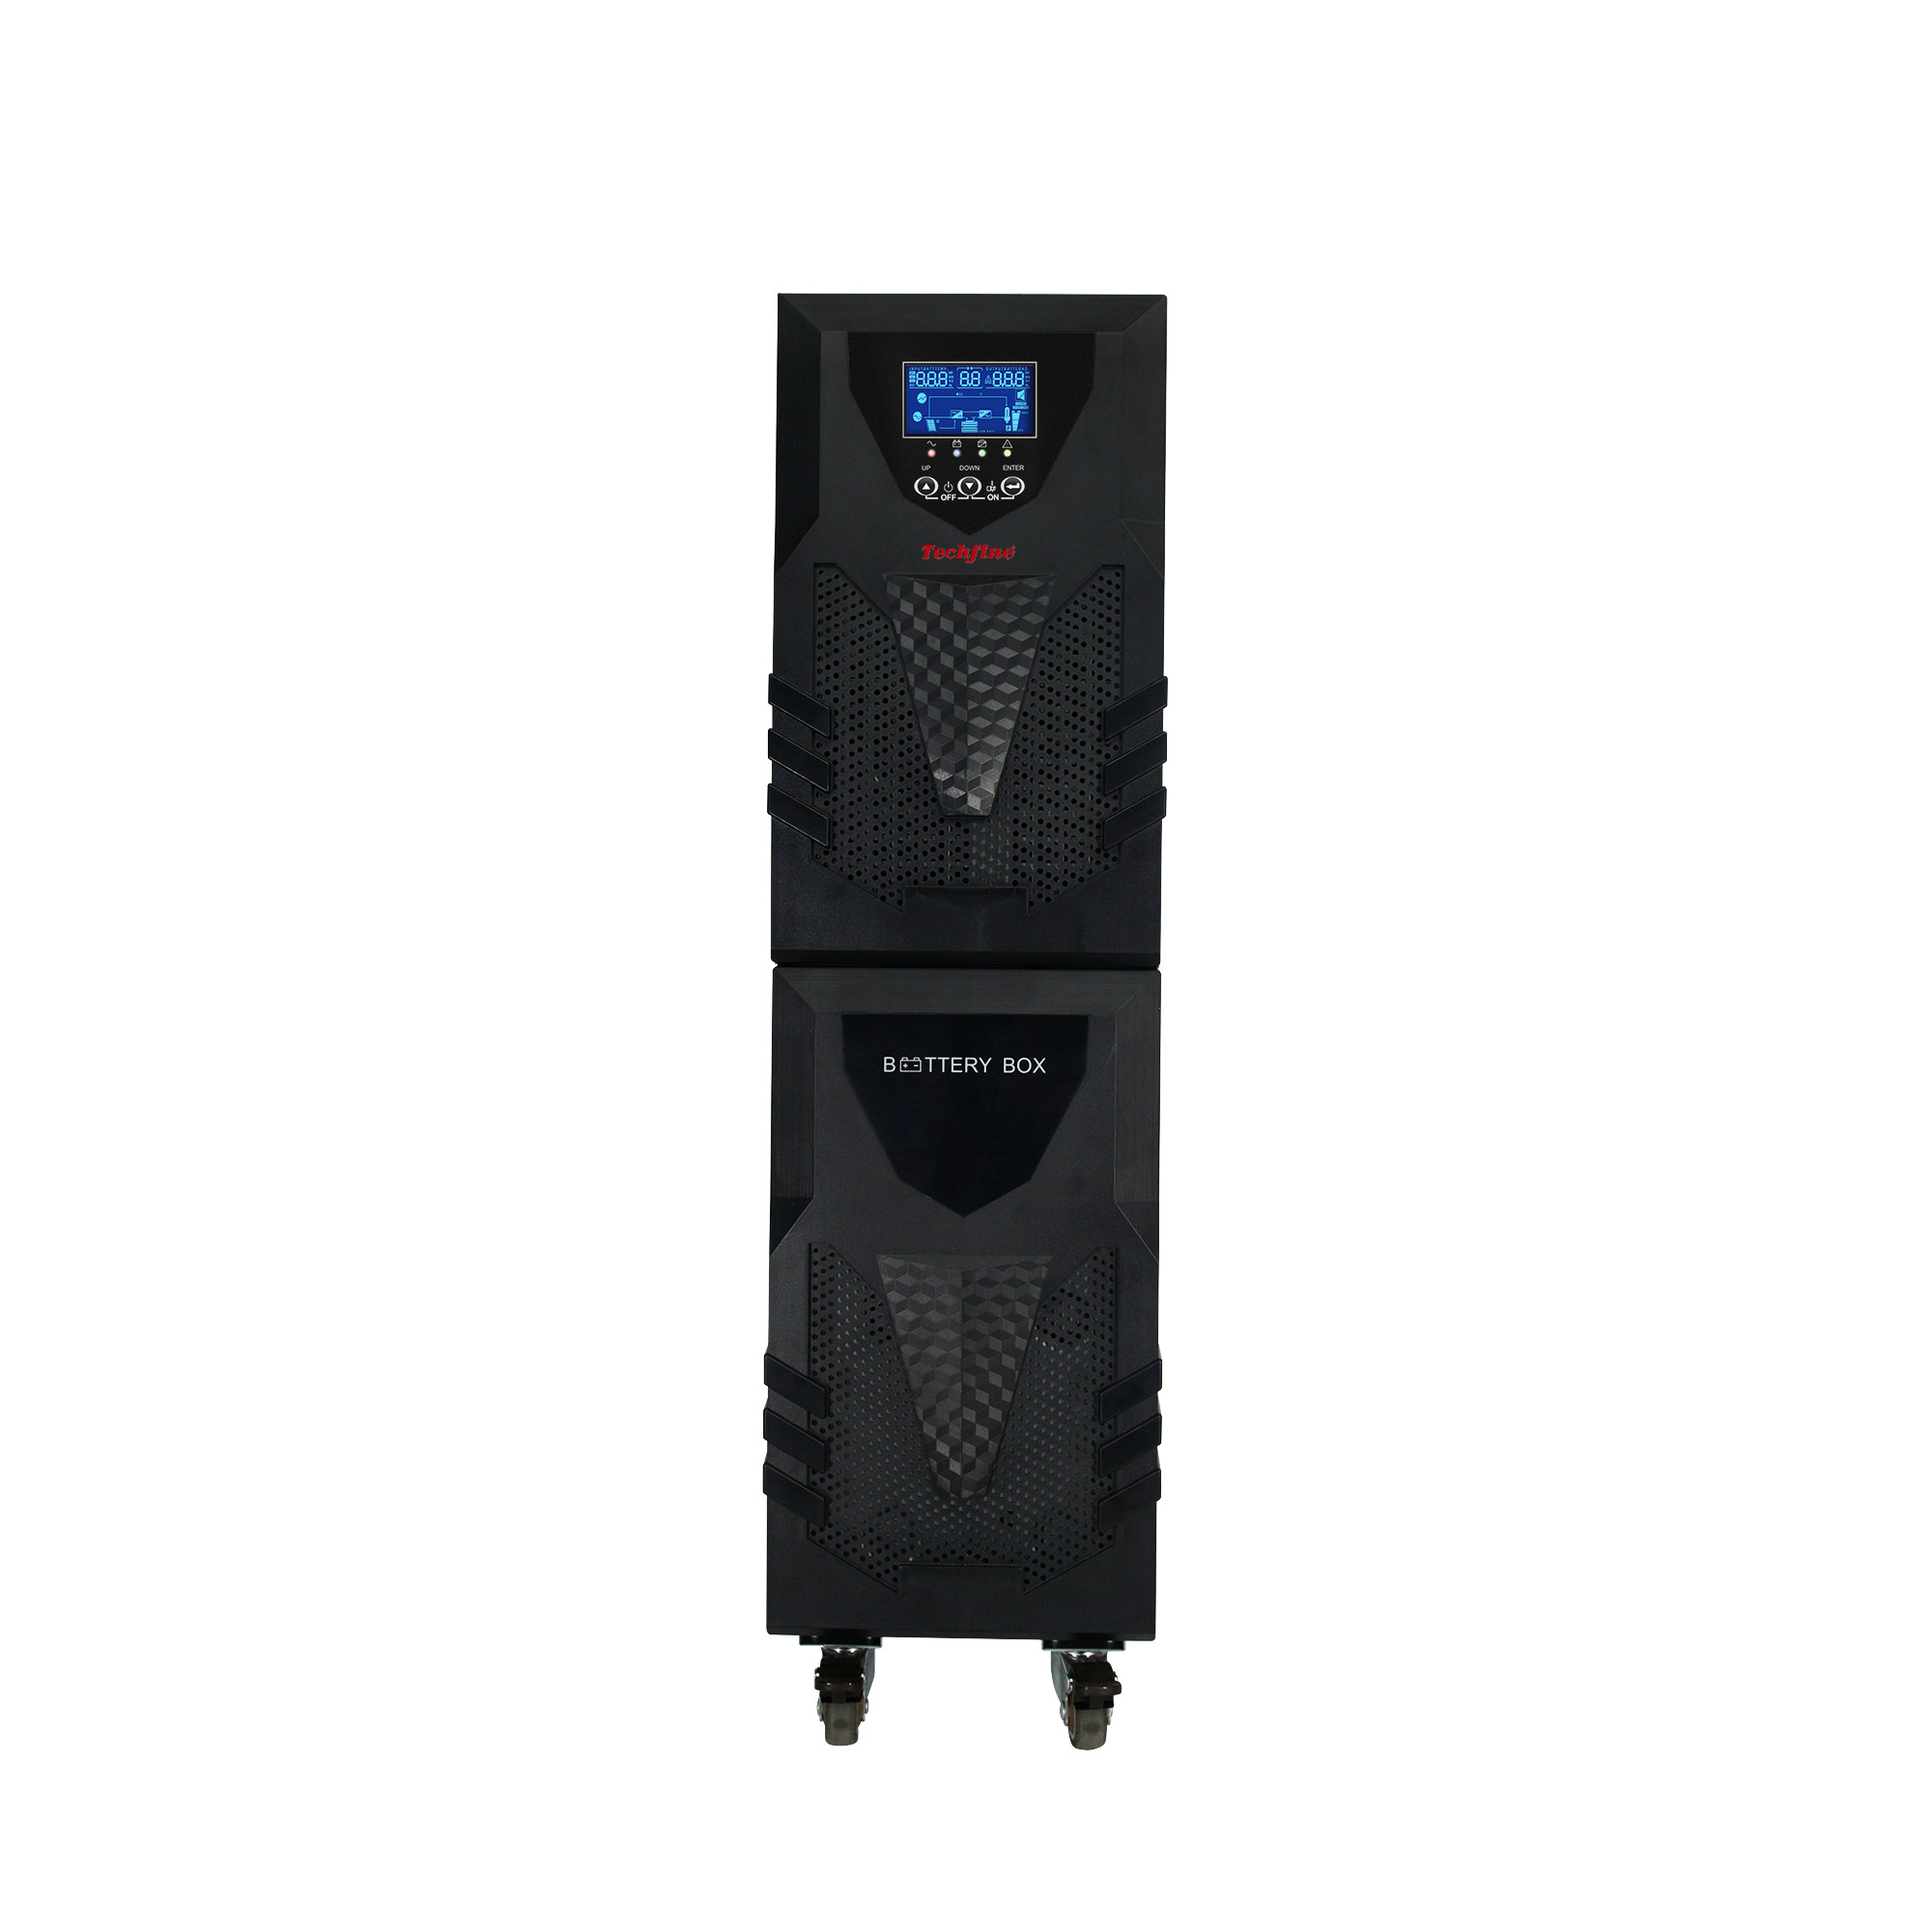 Single Phase High Frequency Online 5000 Watt Ups 10000W 10KVA Long Backup External Power Backup UPS